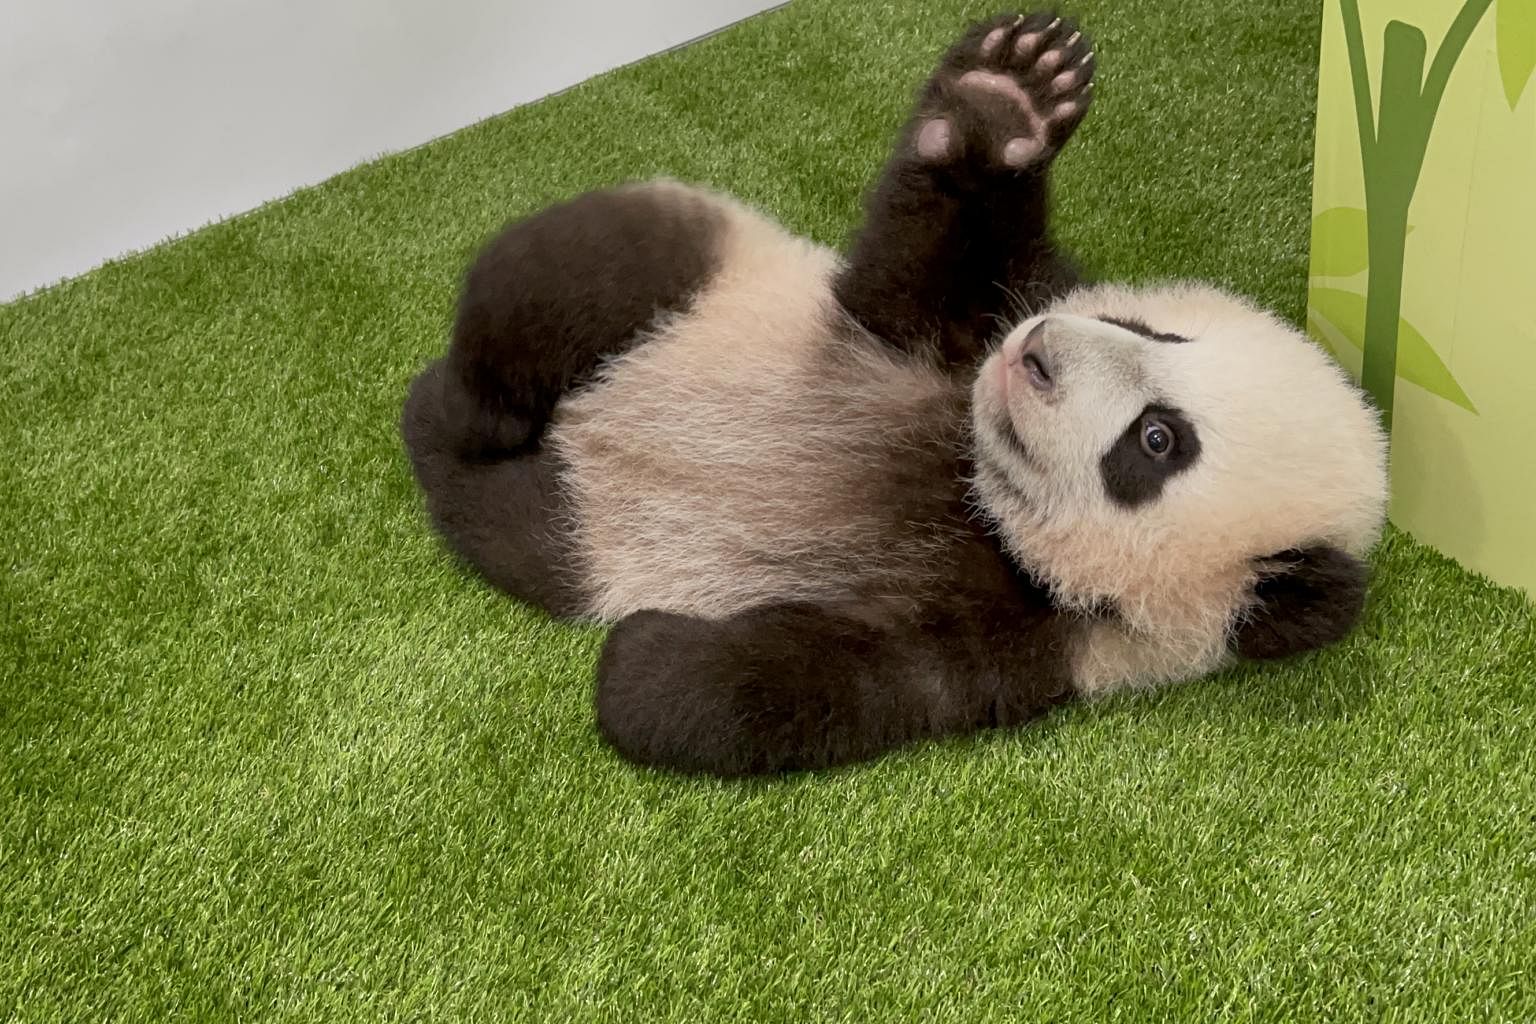 le le, first panda cub born in s'pore, celebrates first birthday